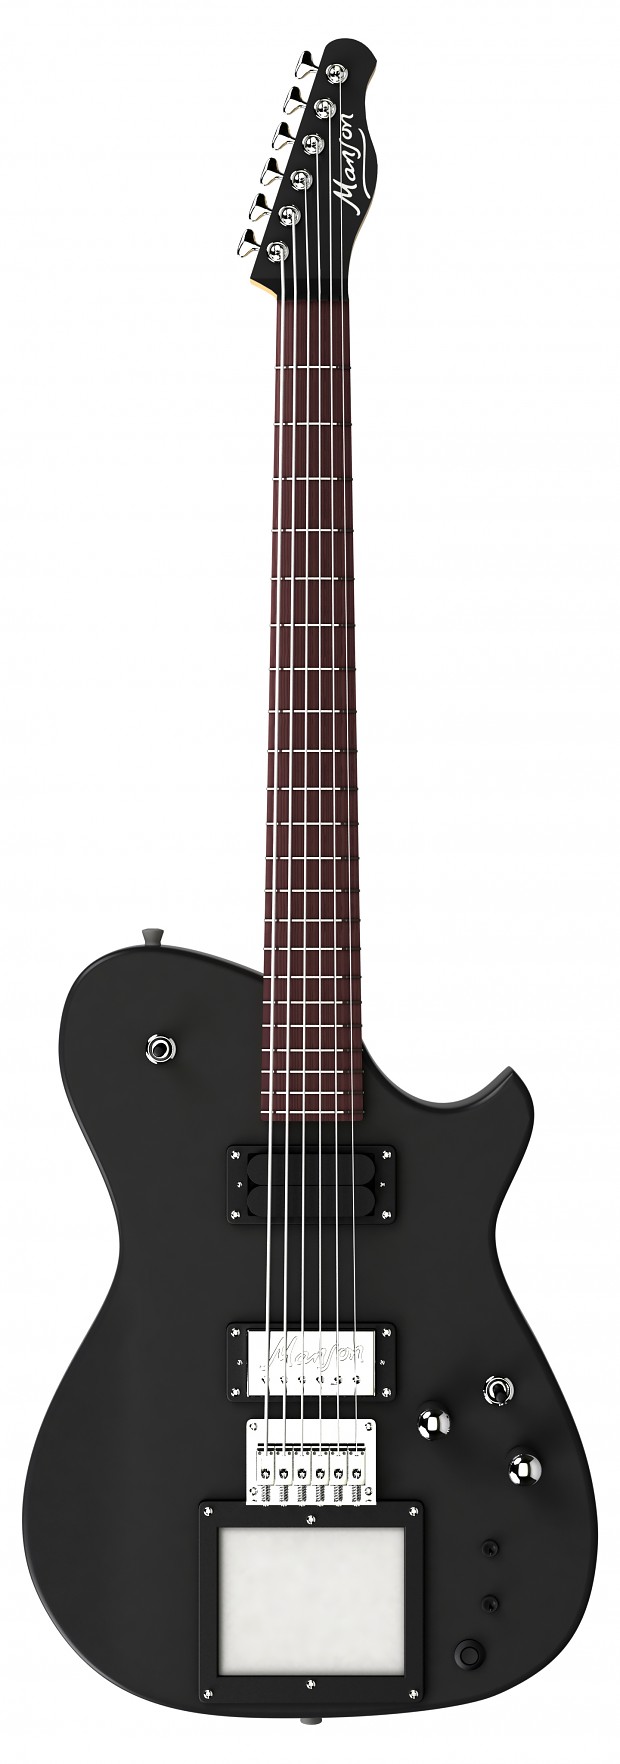 Manson MB-1 Guitar Model